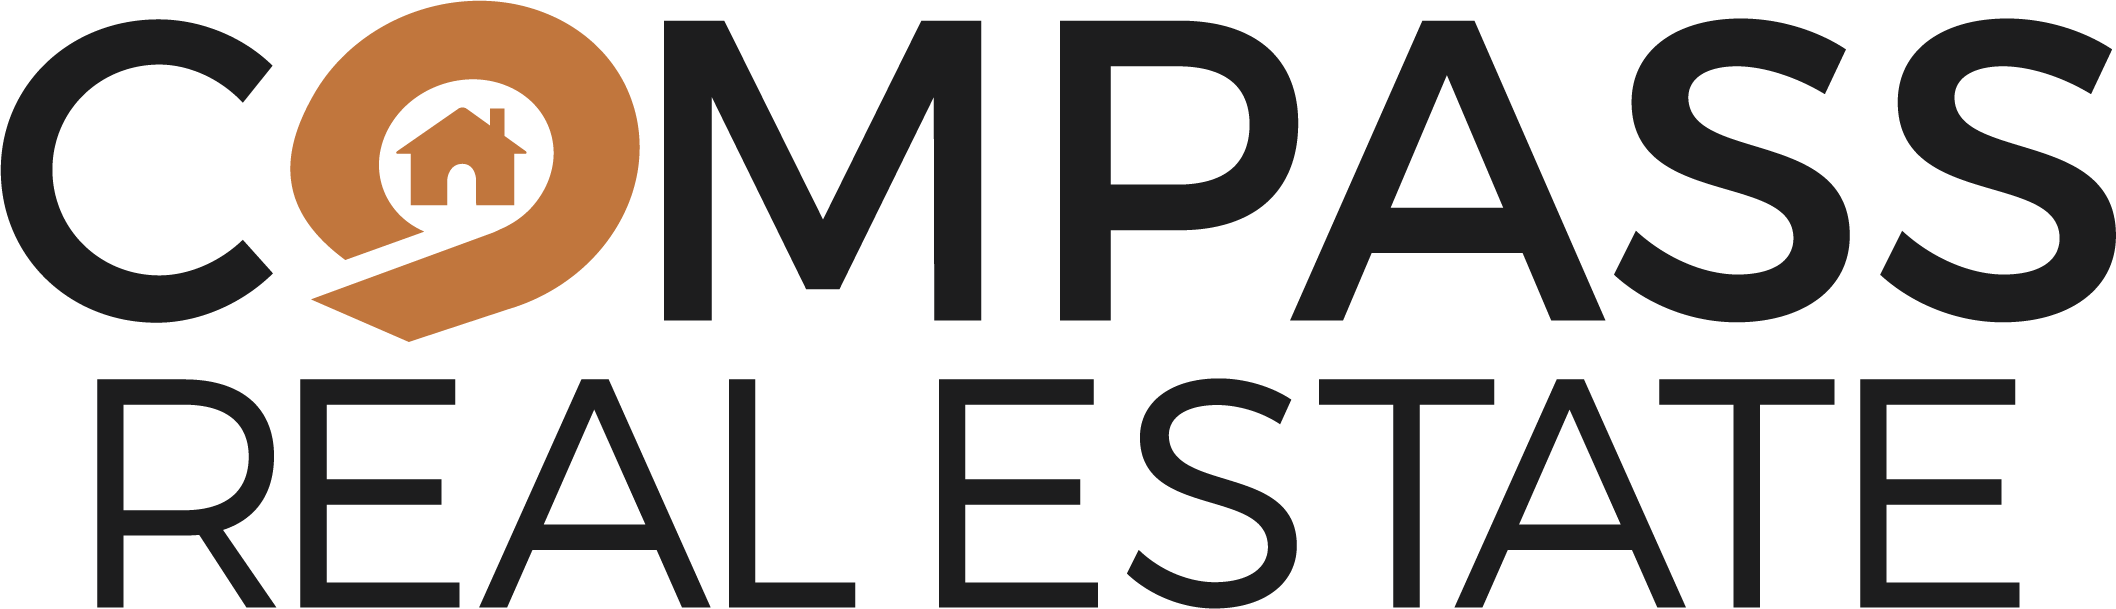 Compass Real Estate Logo LogoDix